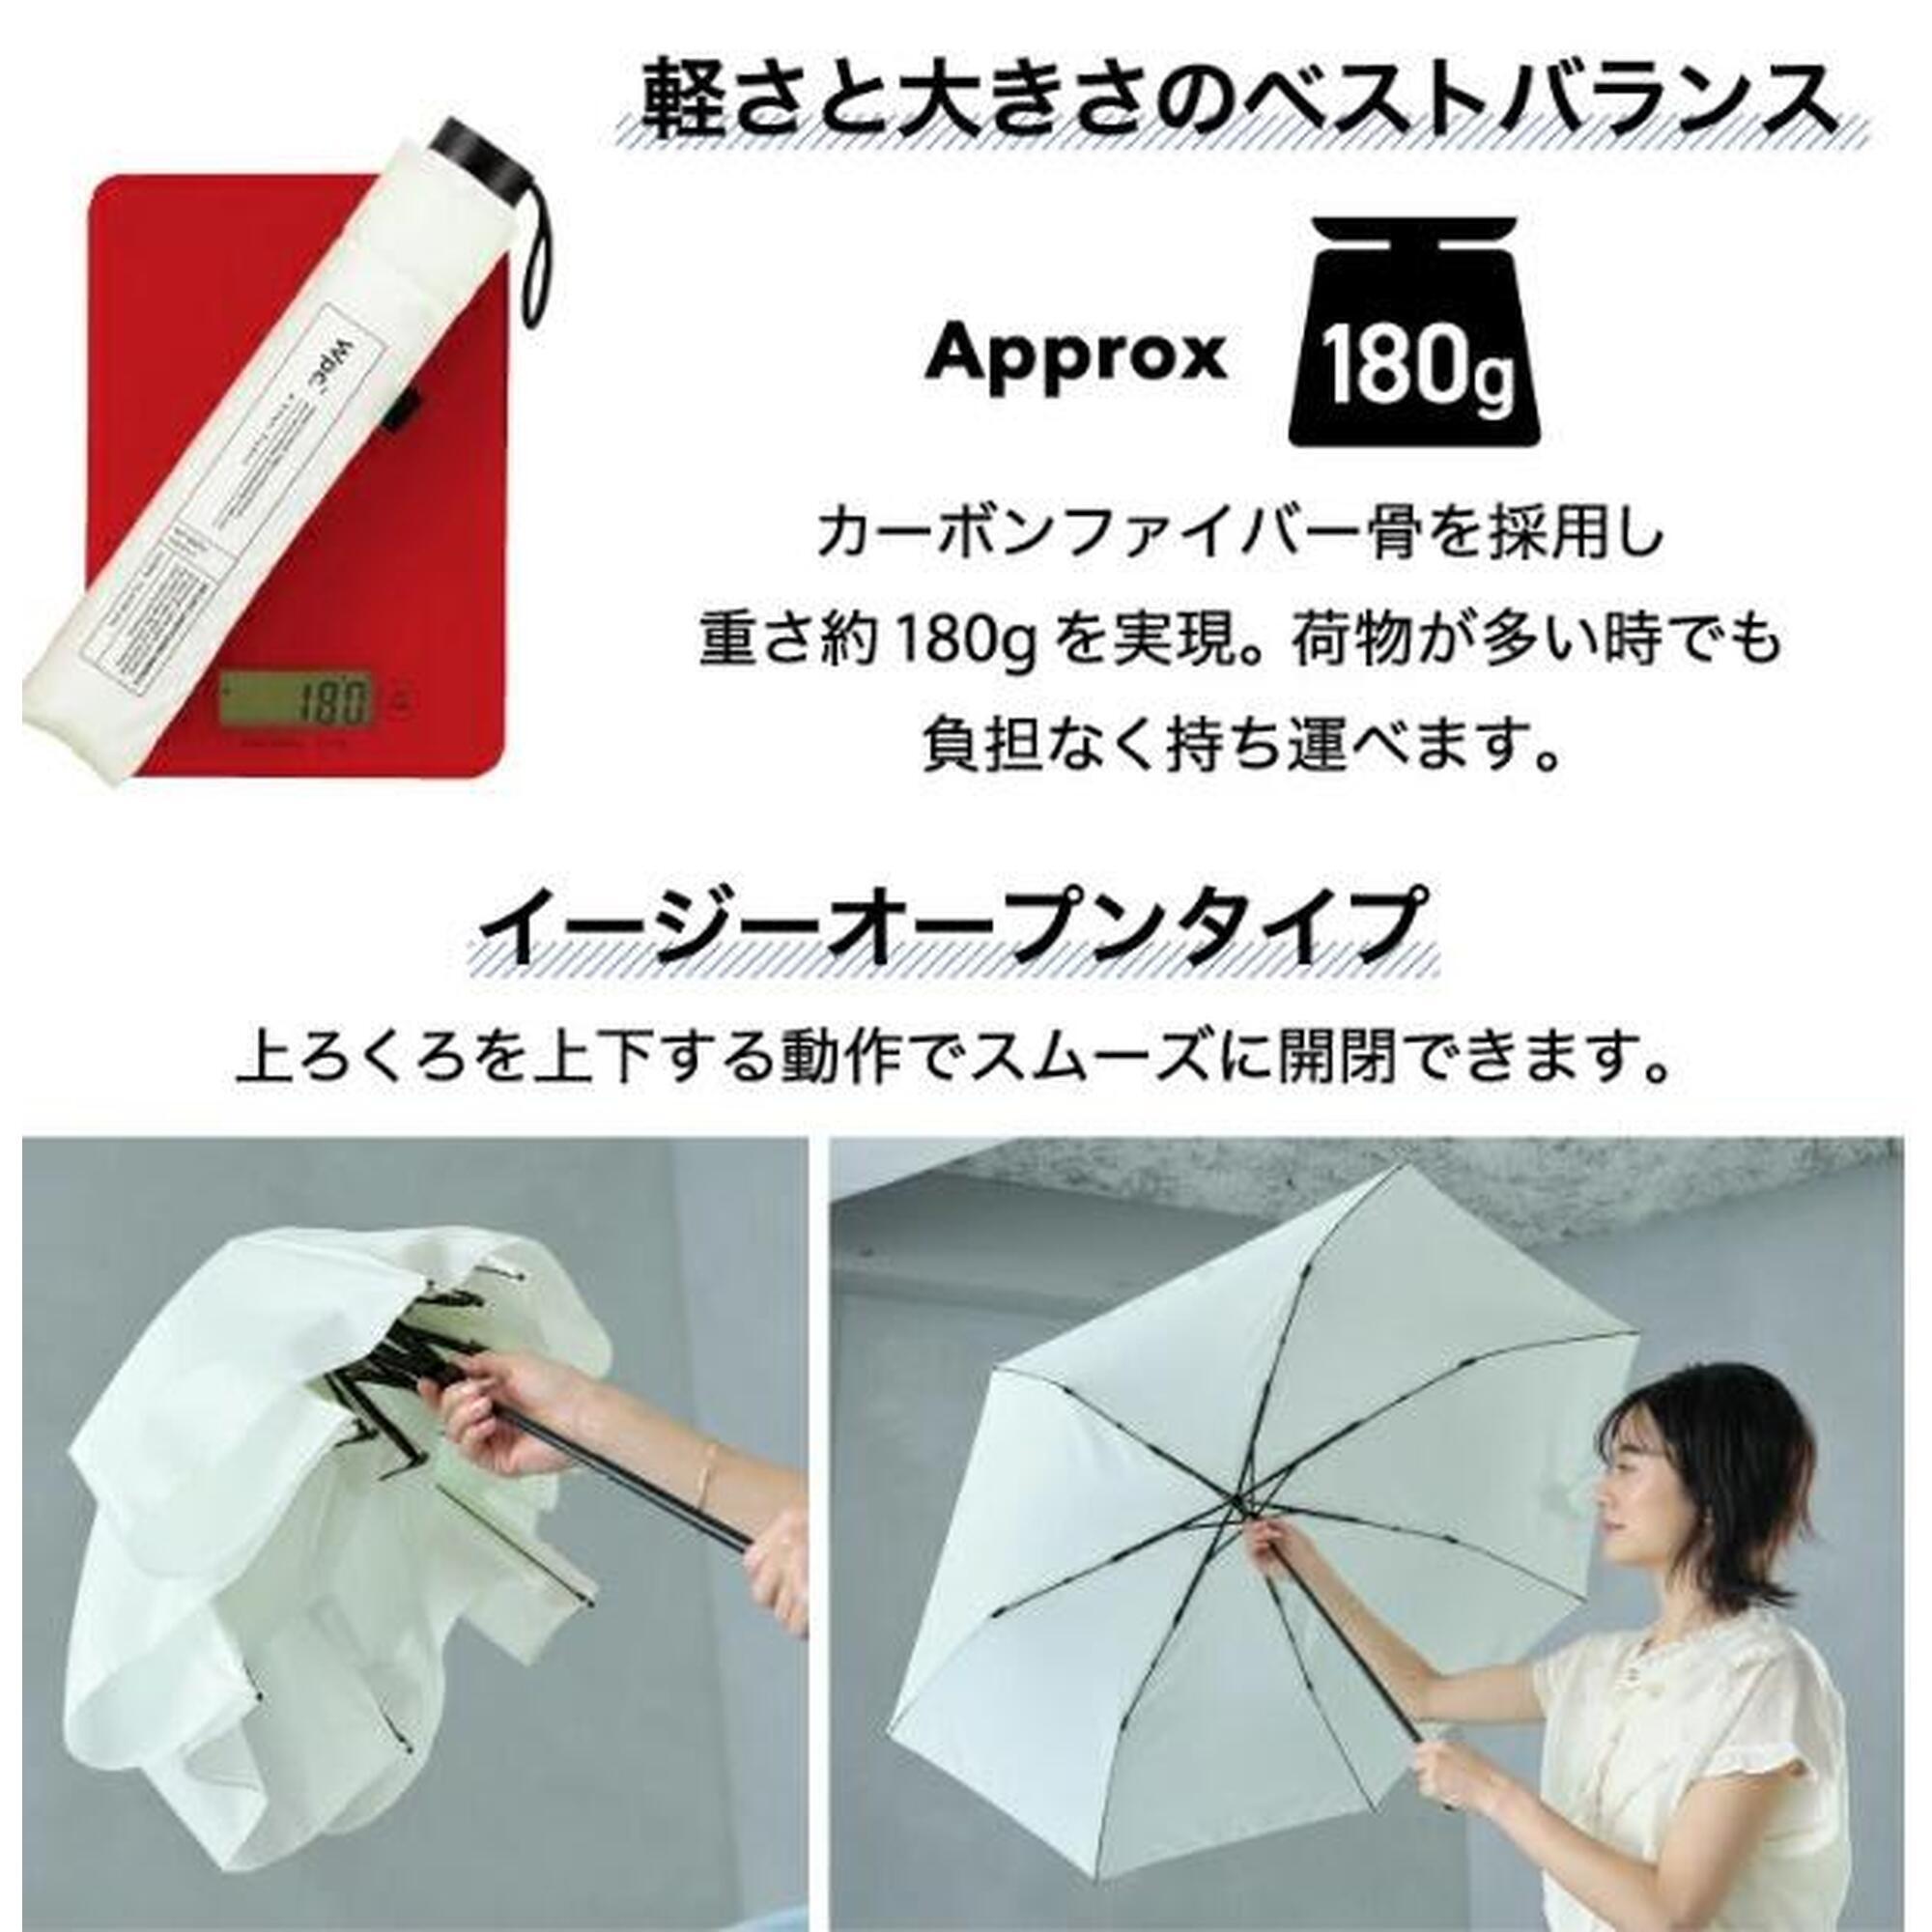 Auto Foldable Umbrella - Navy Blue